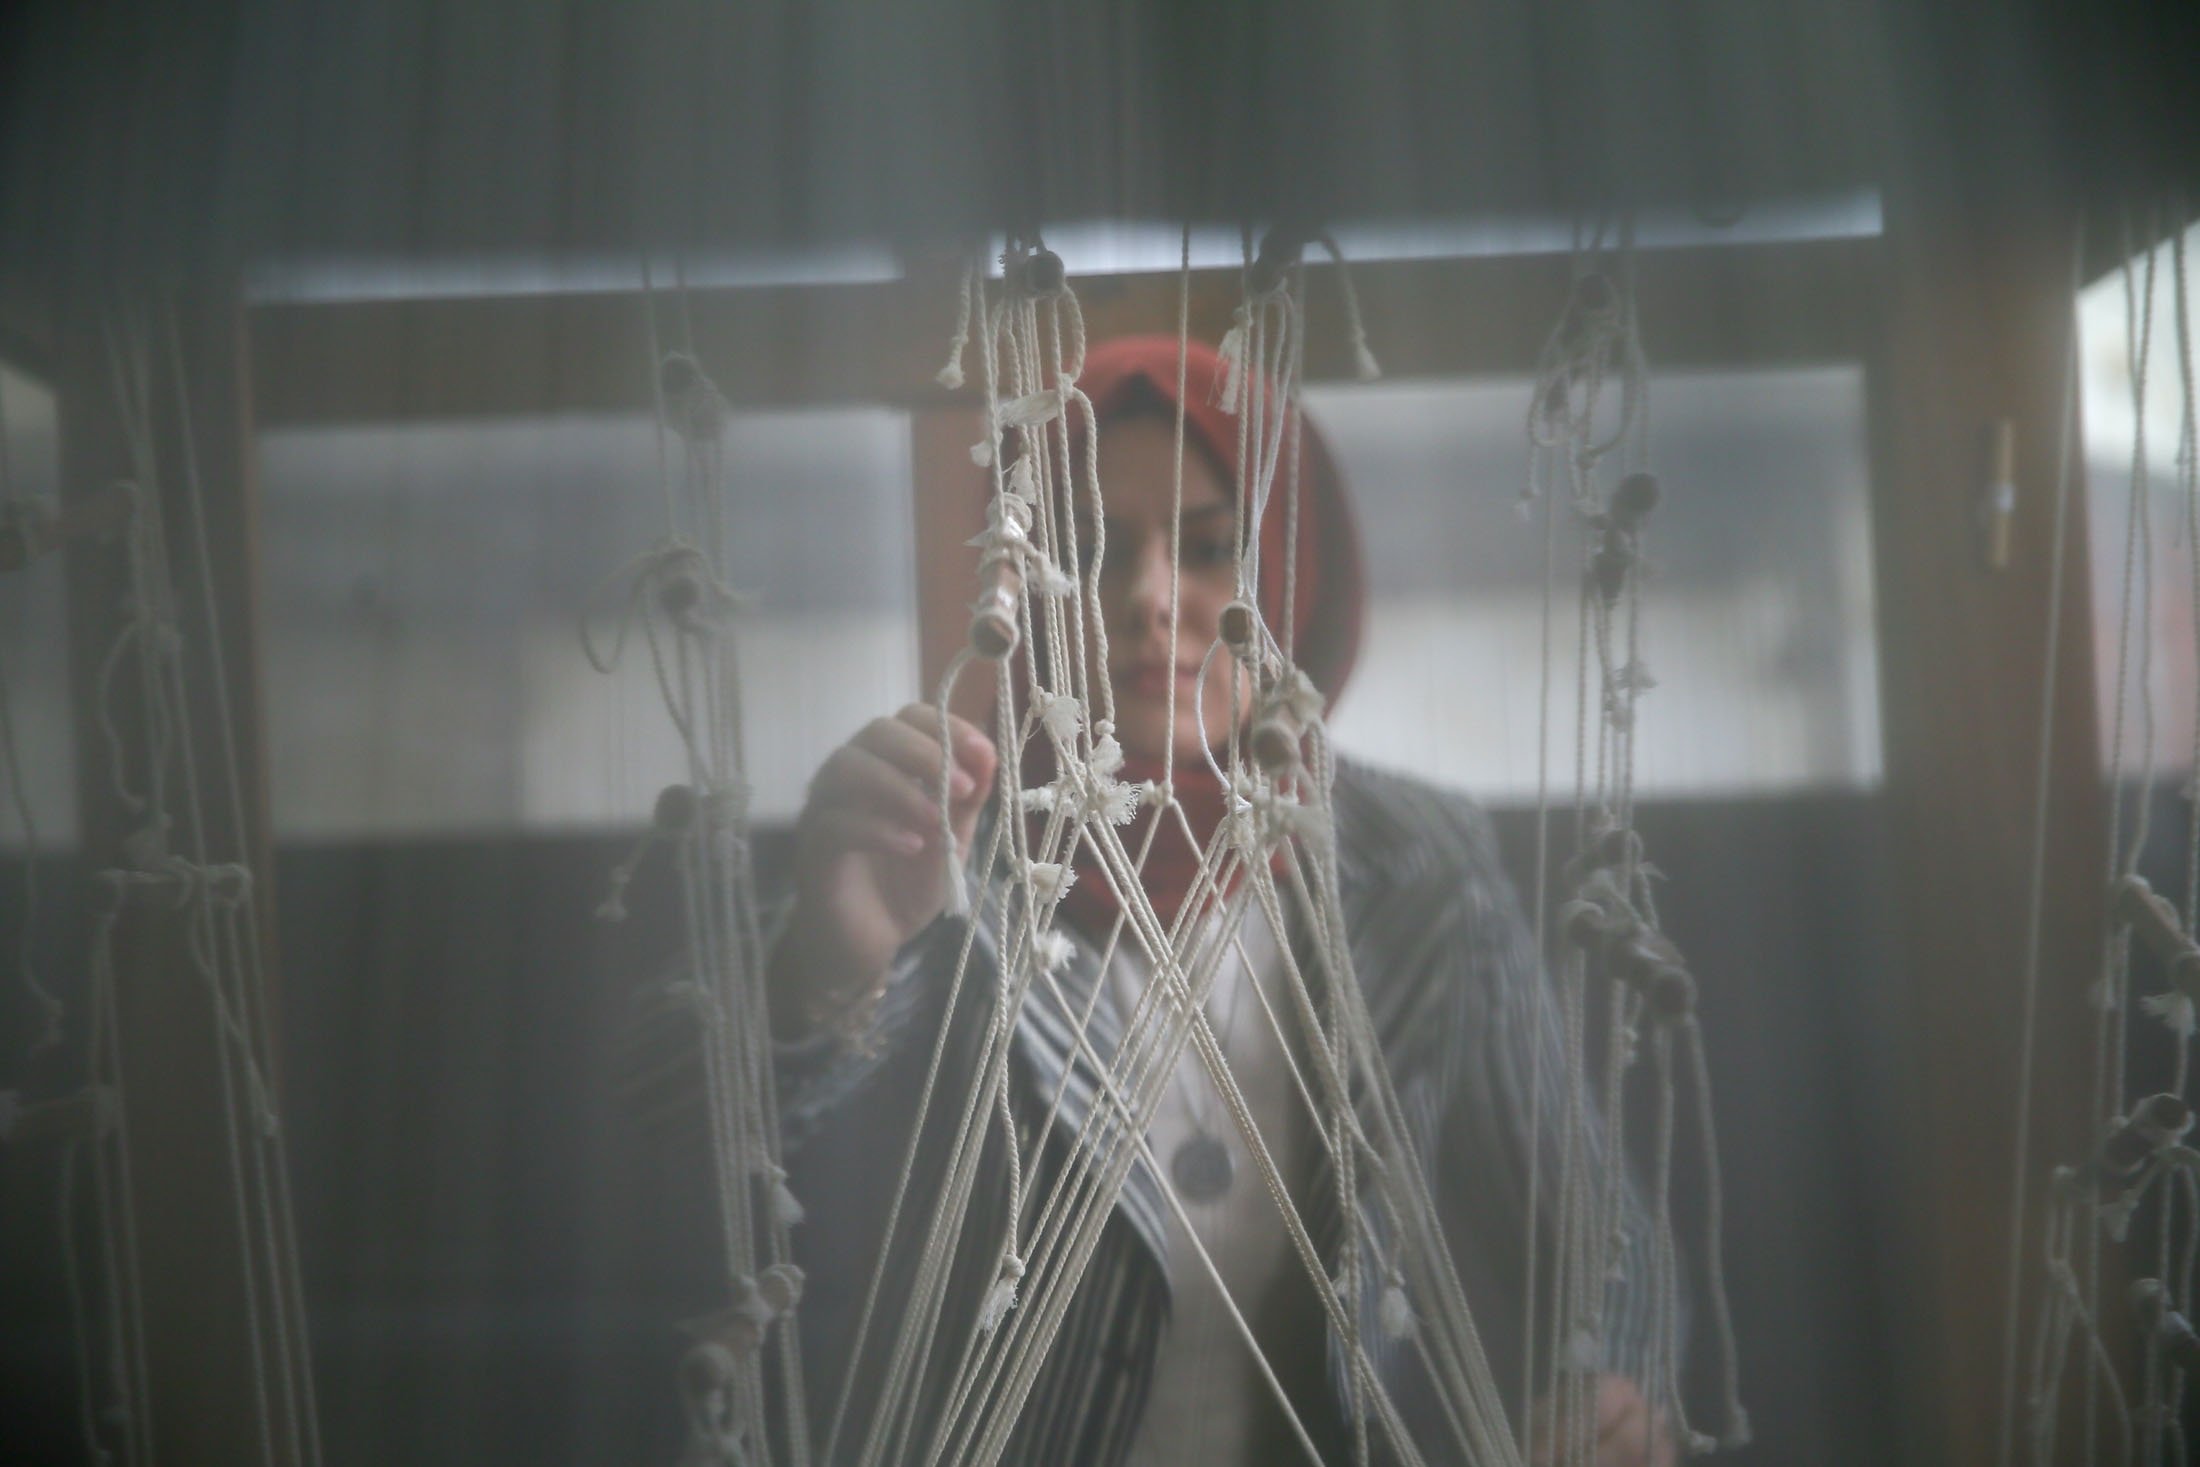 Nurefşan Yaykal keeps the traditional Beledi weaving method alive in her workshop, in Tire district of Izmir, Turkey, Dec. 14, 2021. (AA Photo)